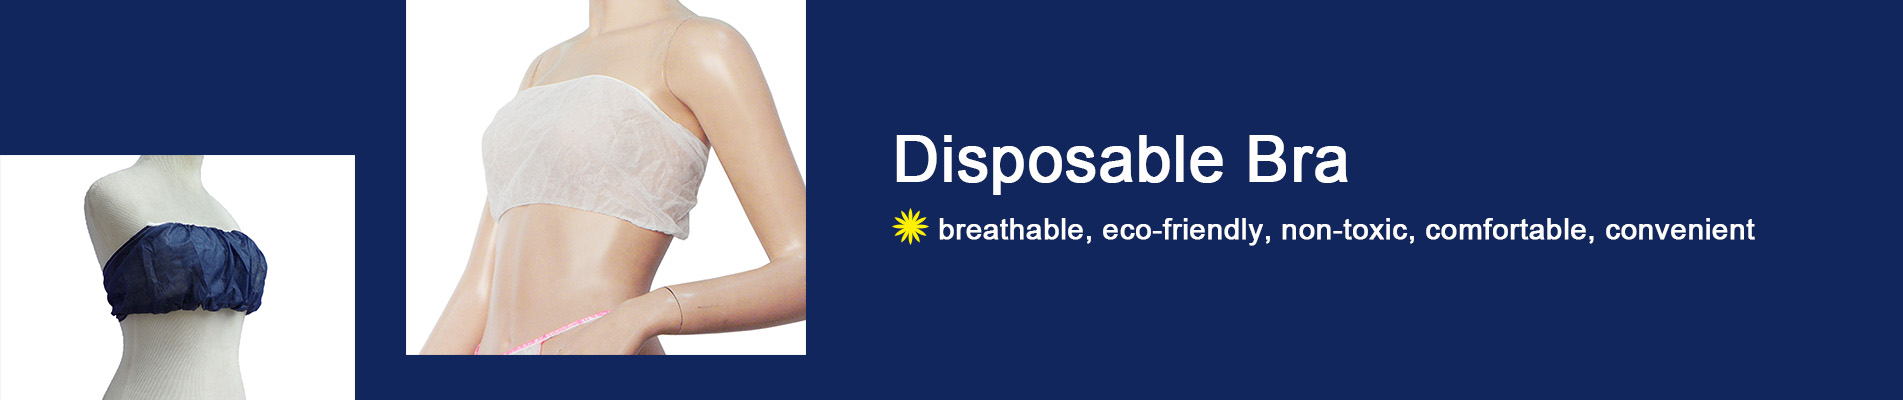 Disposable Bra